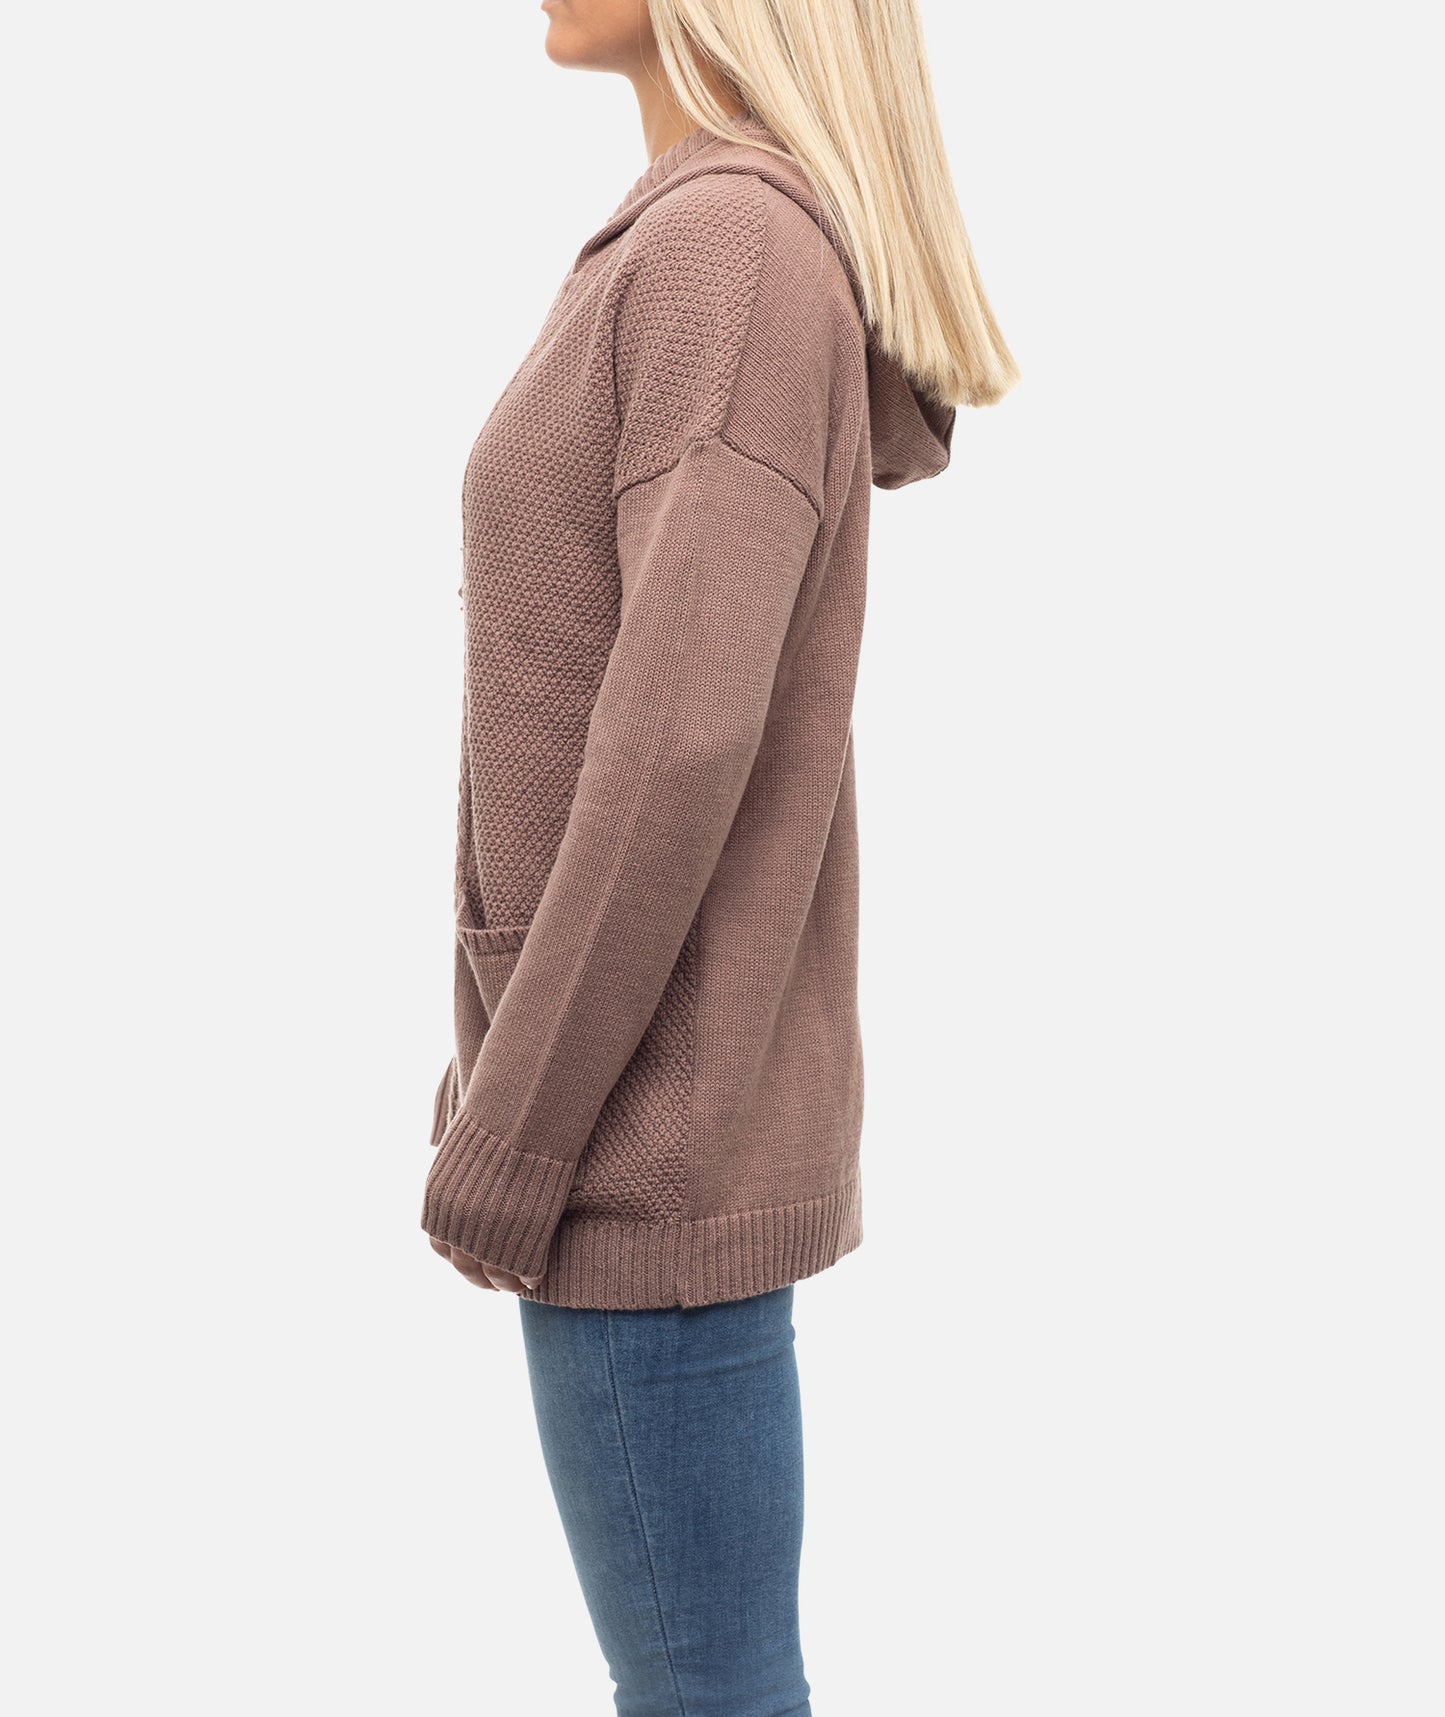 Barnegat Hooded Sweater - Blush